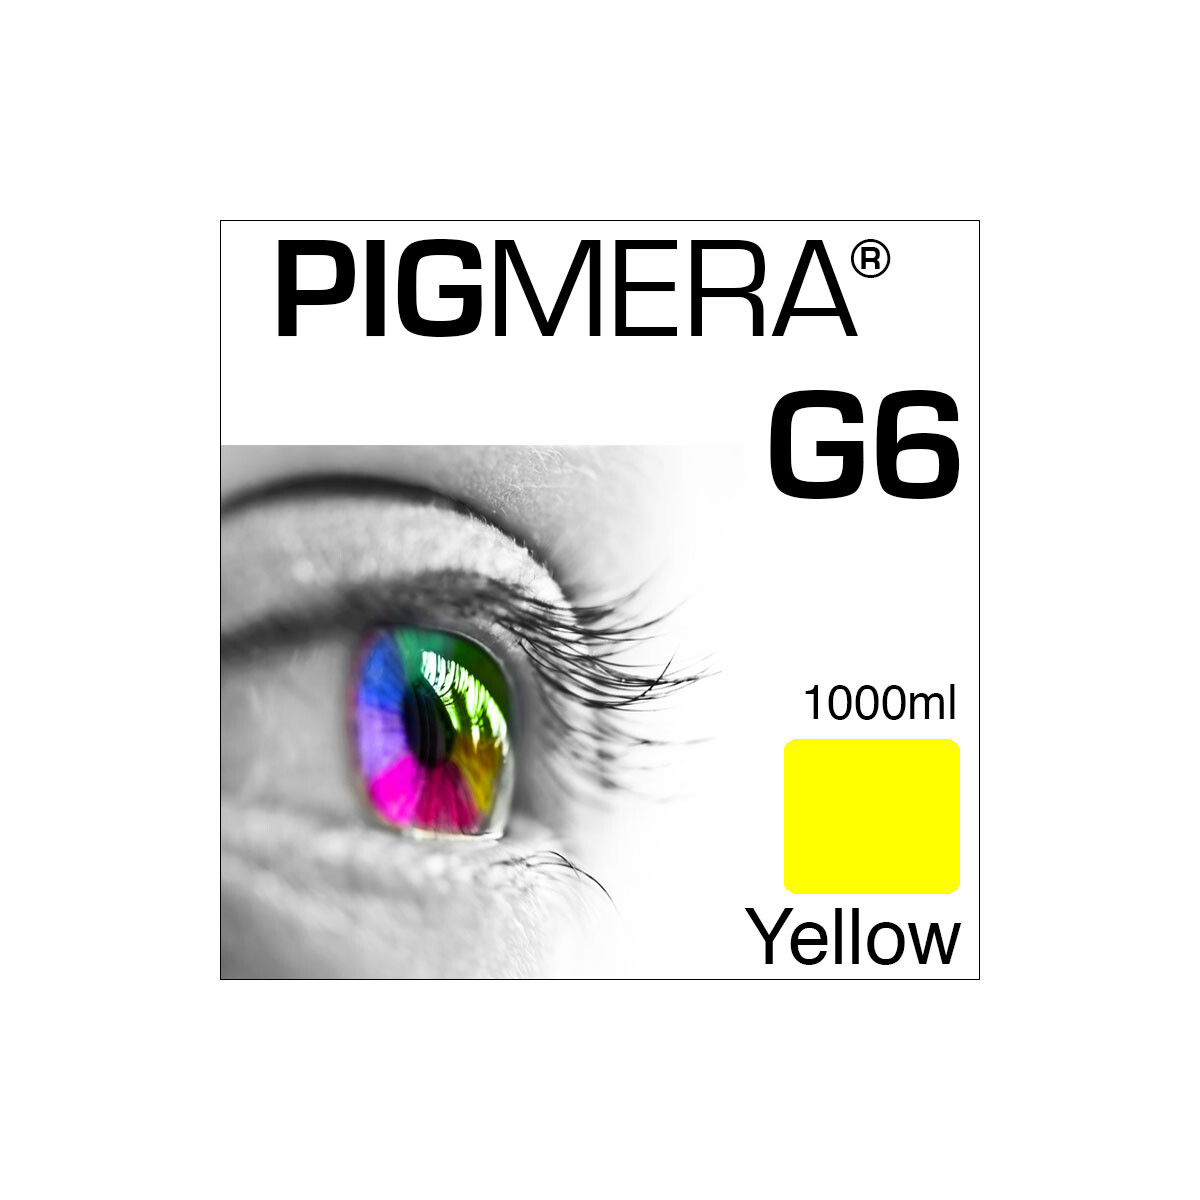 farbenwerk Pigmera G6 Bottle Yellow 1000ml